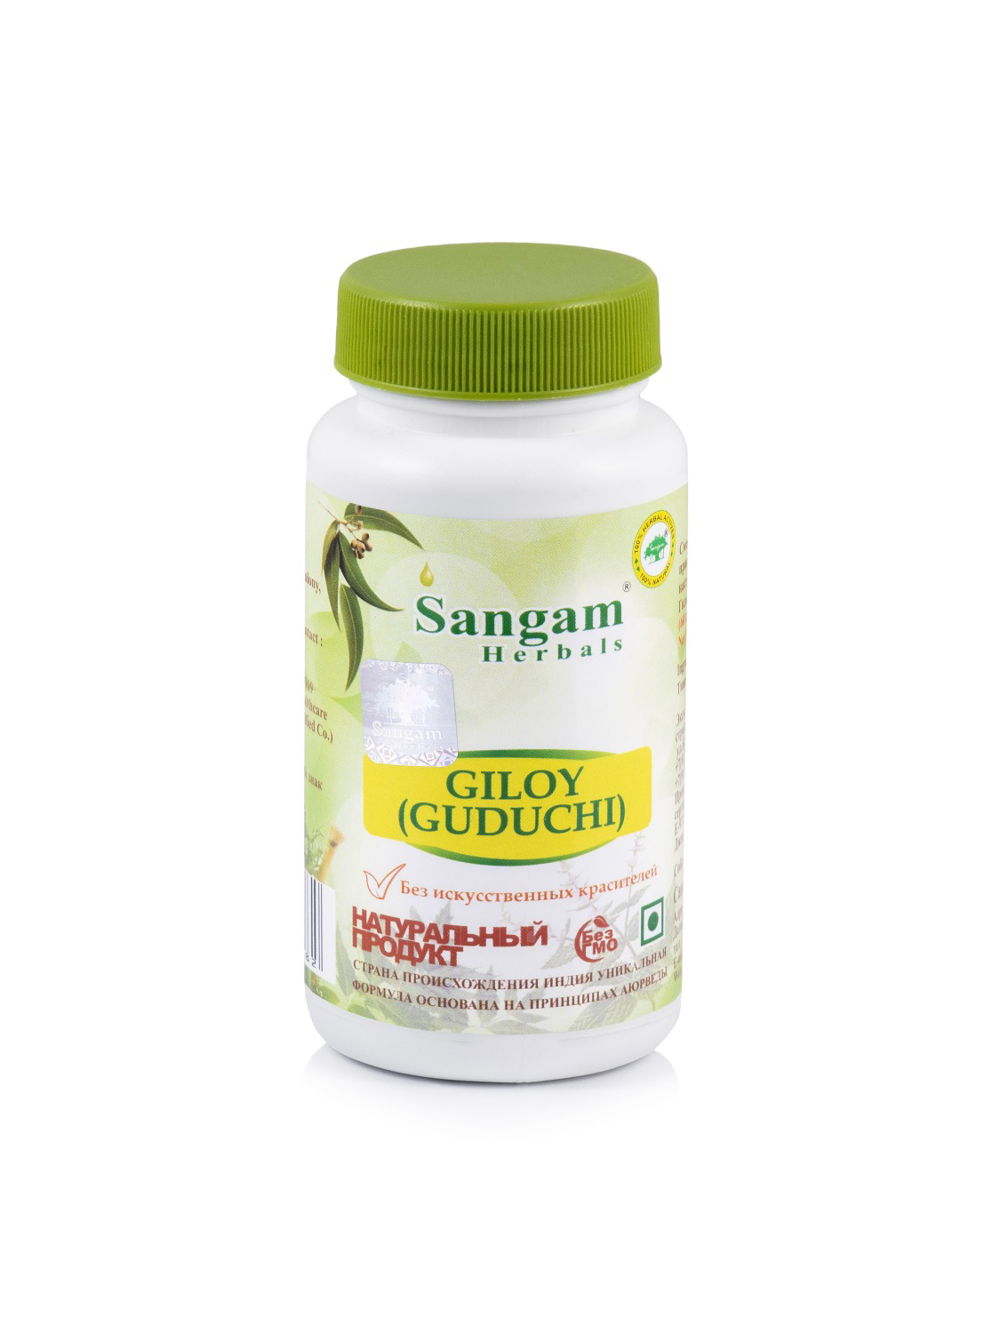 Гилой (Гудучи) Sangam Herbals (60 таблеток), 